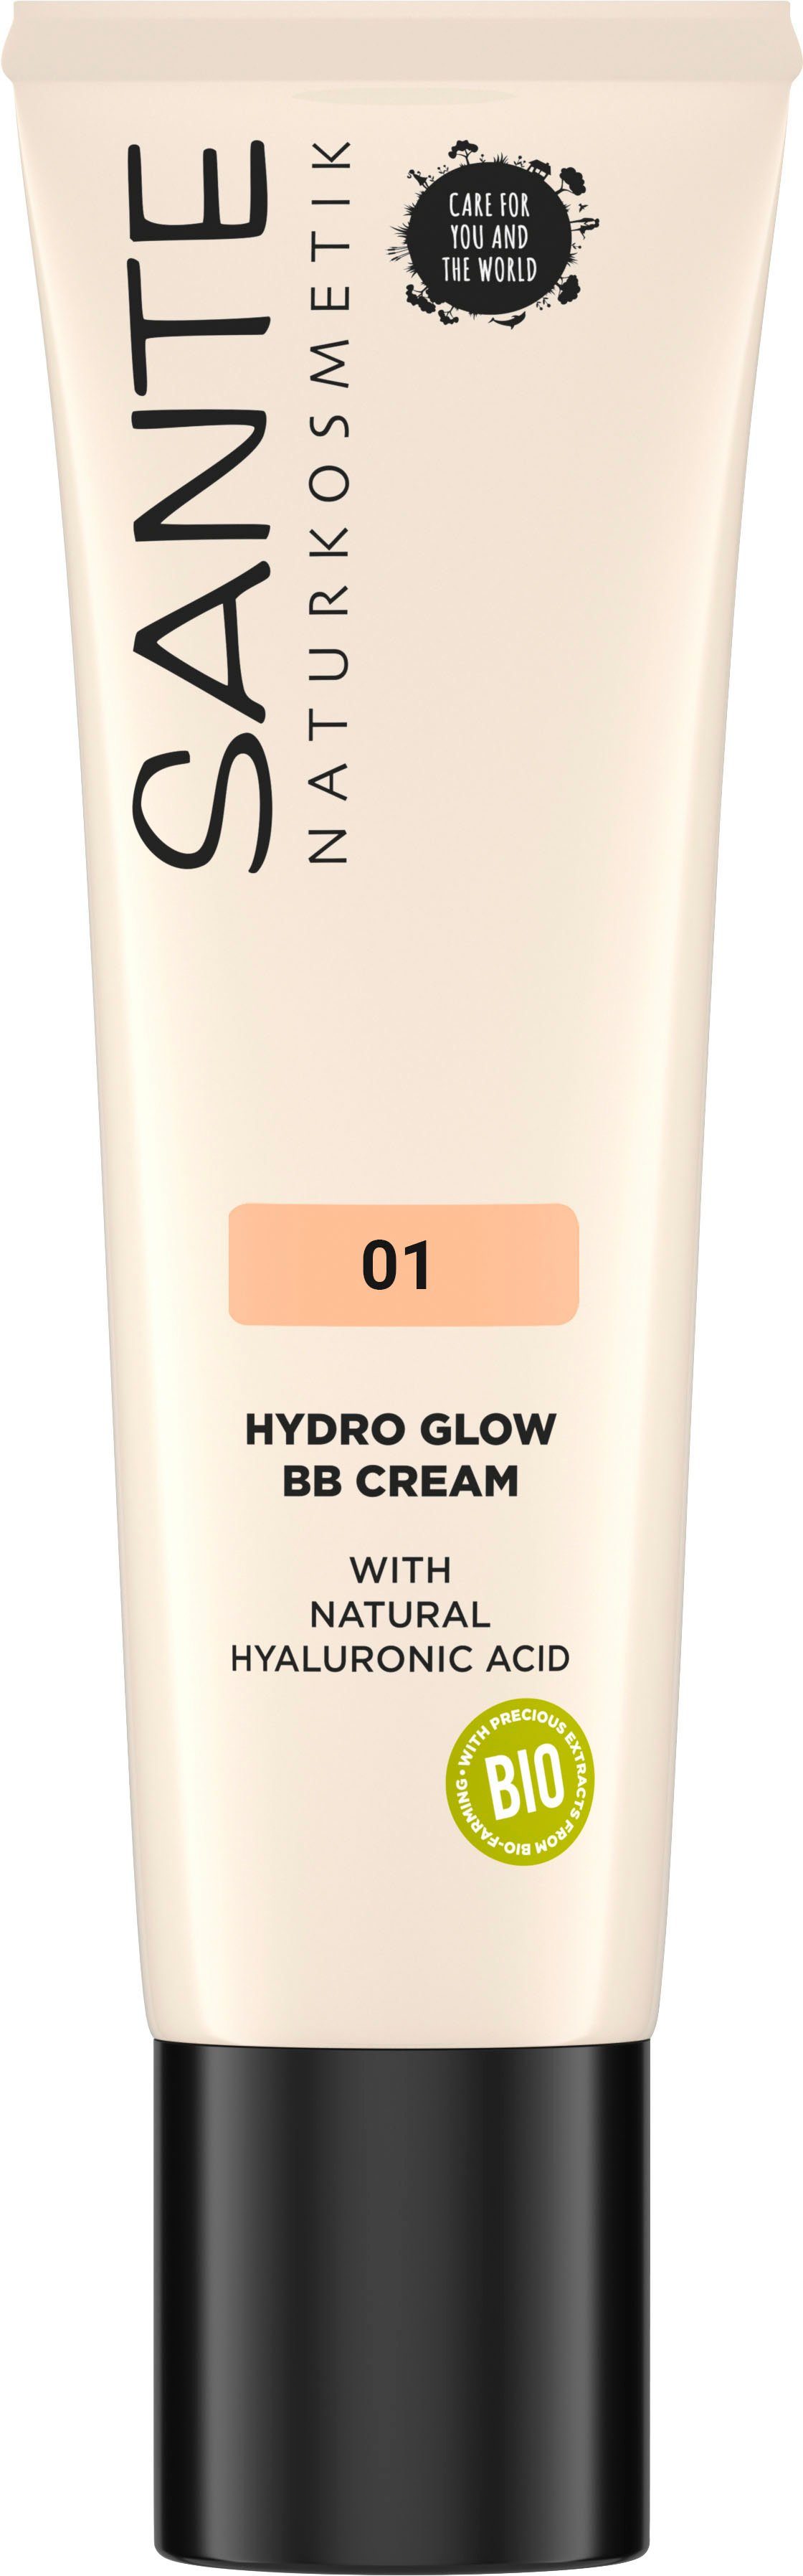 SANTE Make-up Sante Hydro Glow BB Cream 01 Light-Medium | Teint-Make-Up